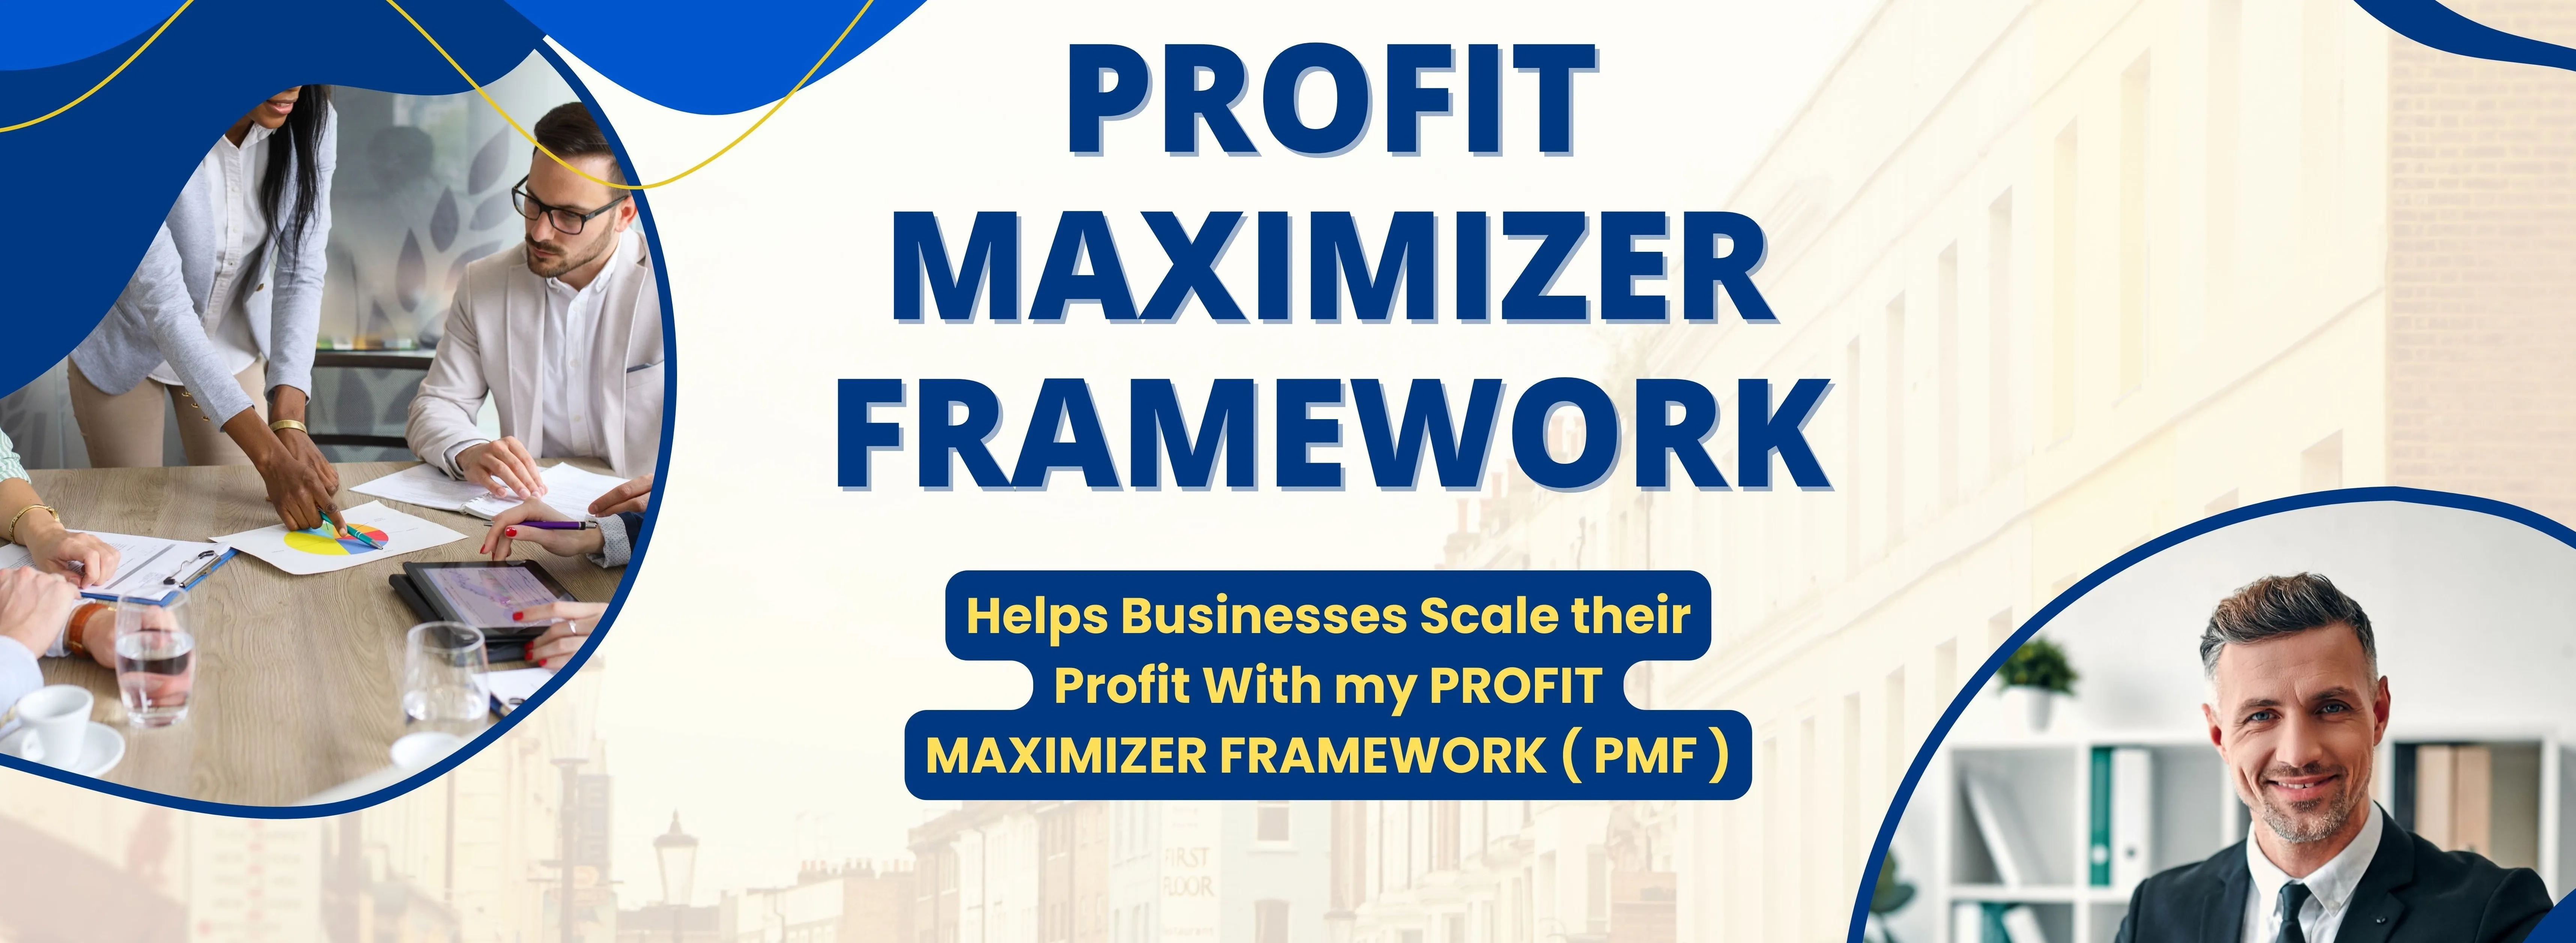 Profit Maximizer Framework